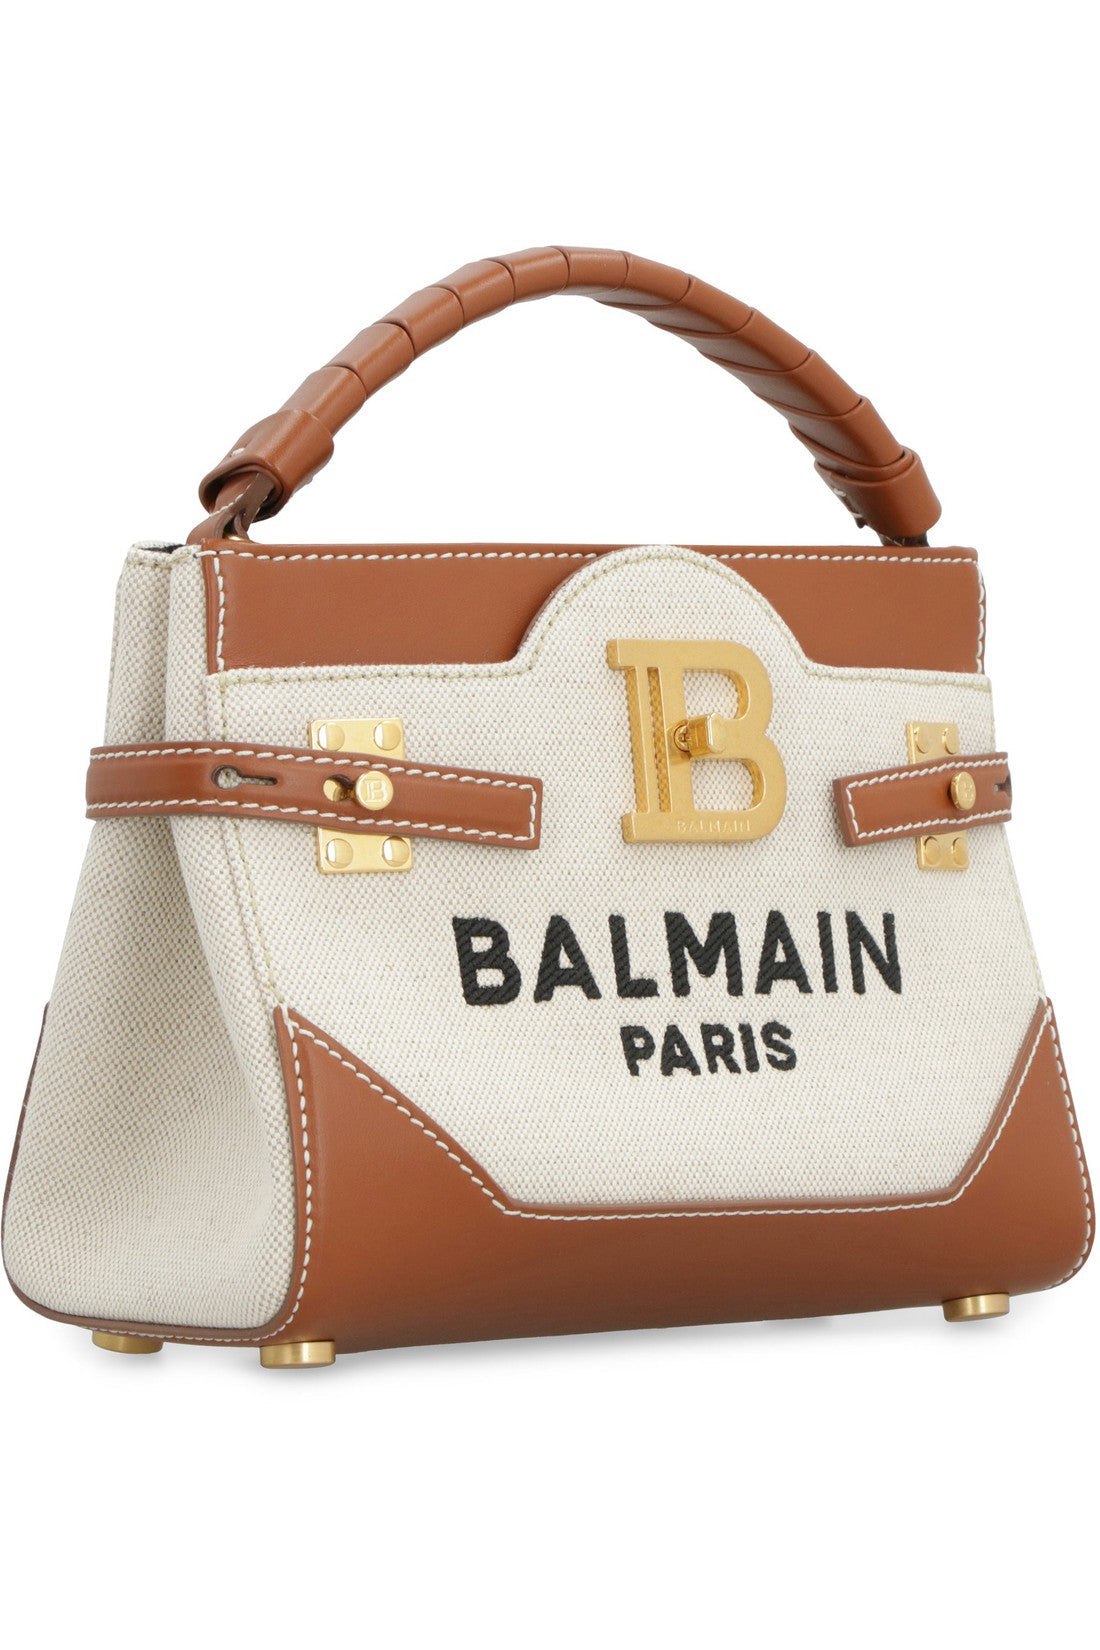 Balmain-OUTLET-SALE-B-Buzz handbag-ARCHIVIST